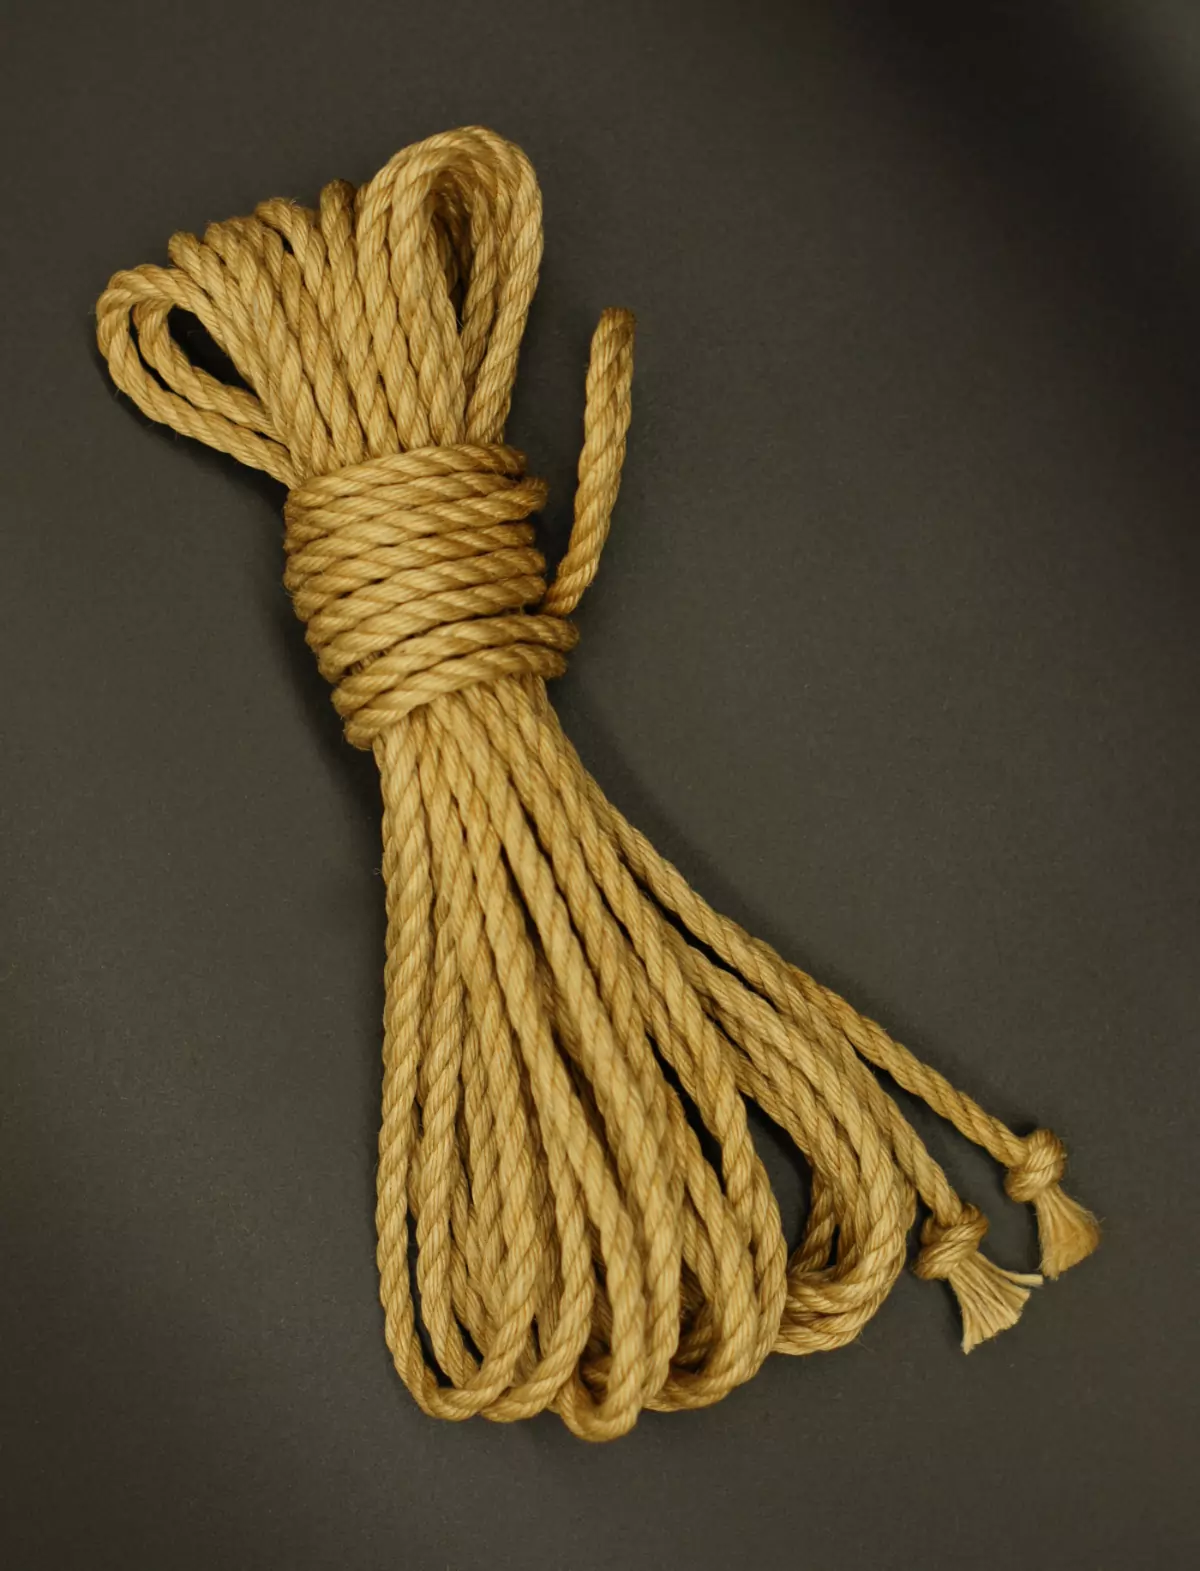  ∅ 5.5mm jute rope, ready-to-use, various lengths, vegan